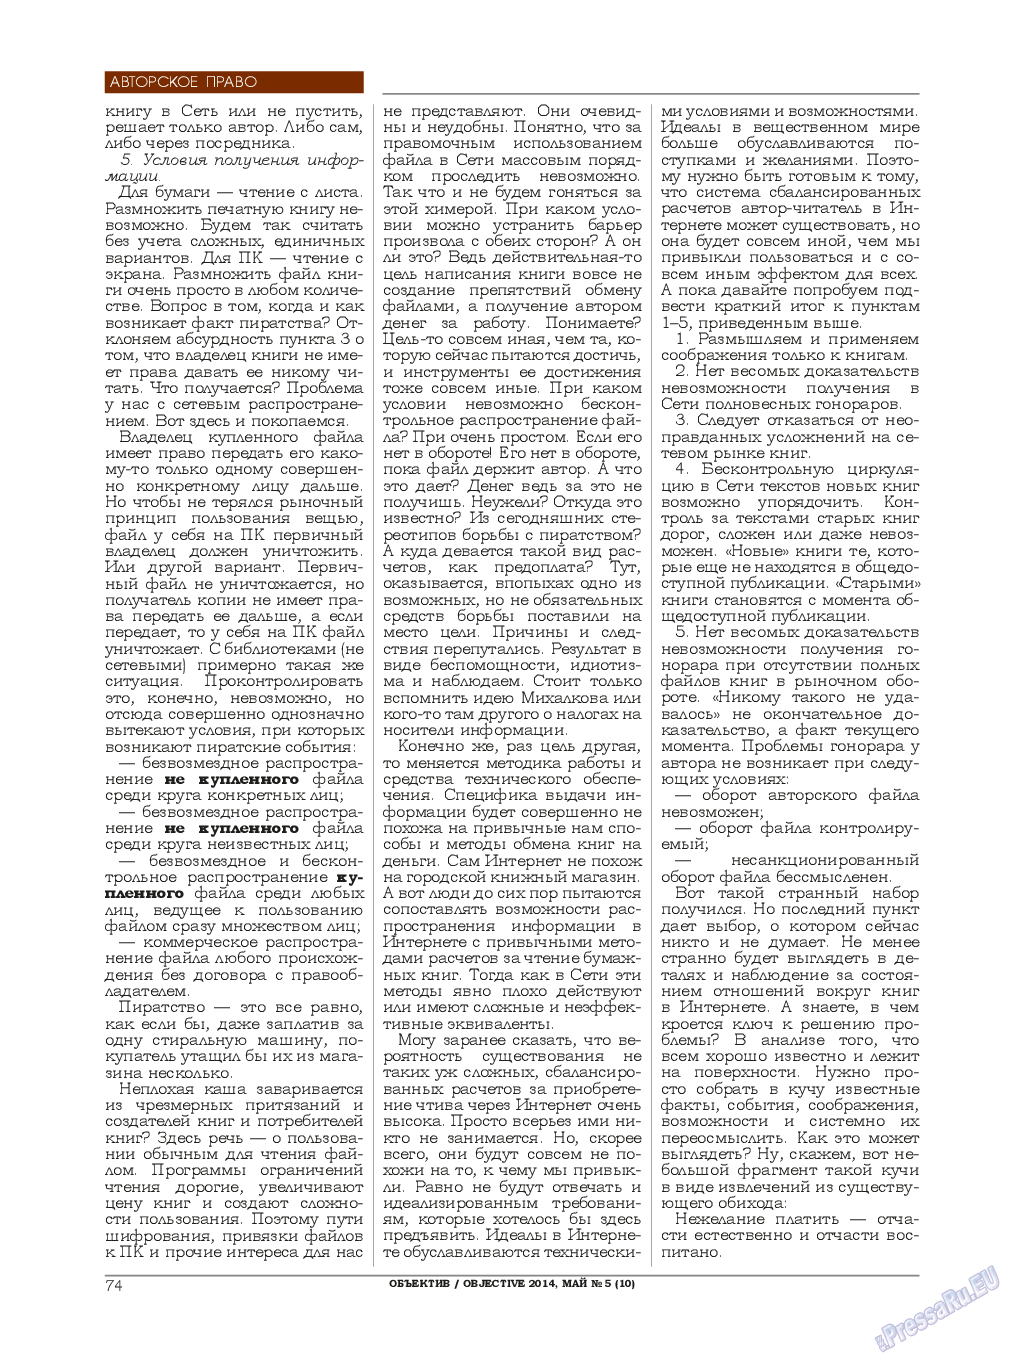 Объектив EU, журнал. 2014 №5 стр.74